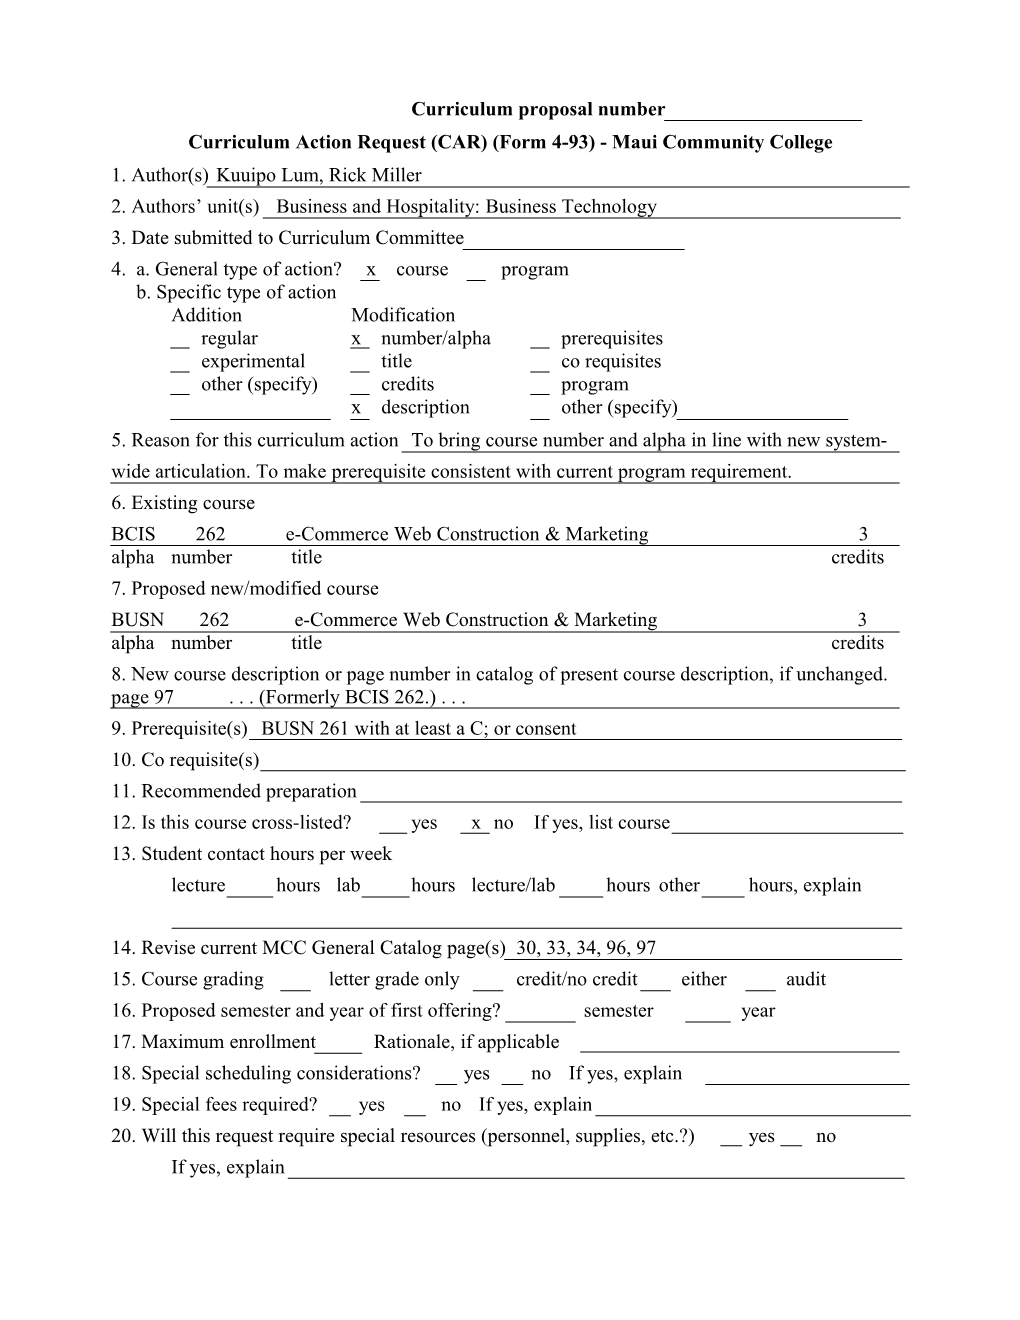 Curriculum Action Request (CAR) (Form 4-93) - Mauicommunity College